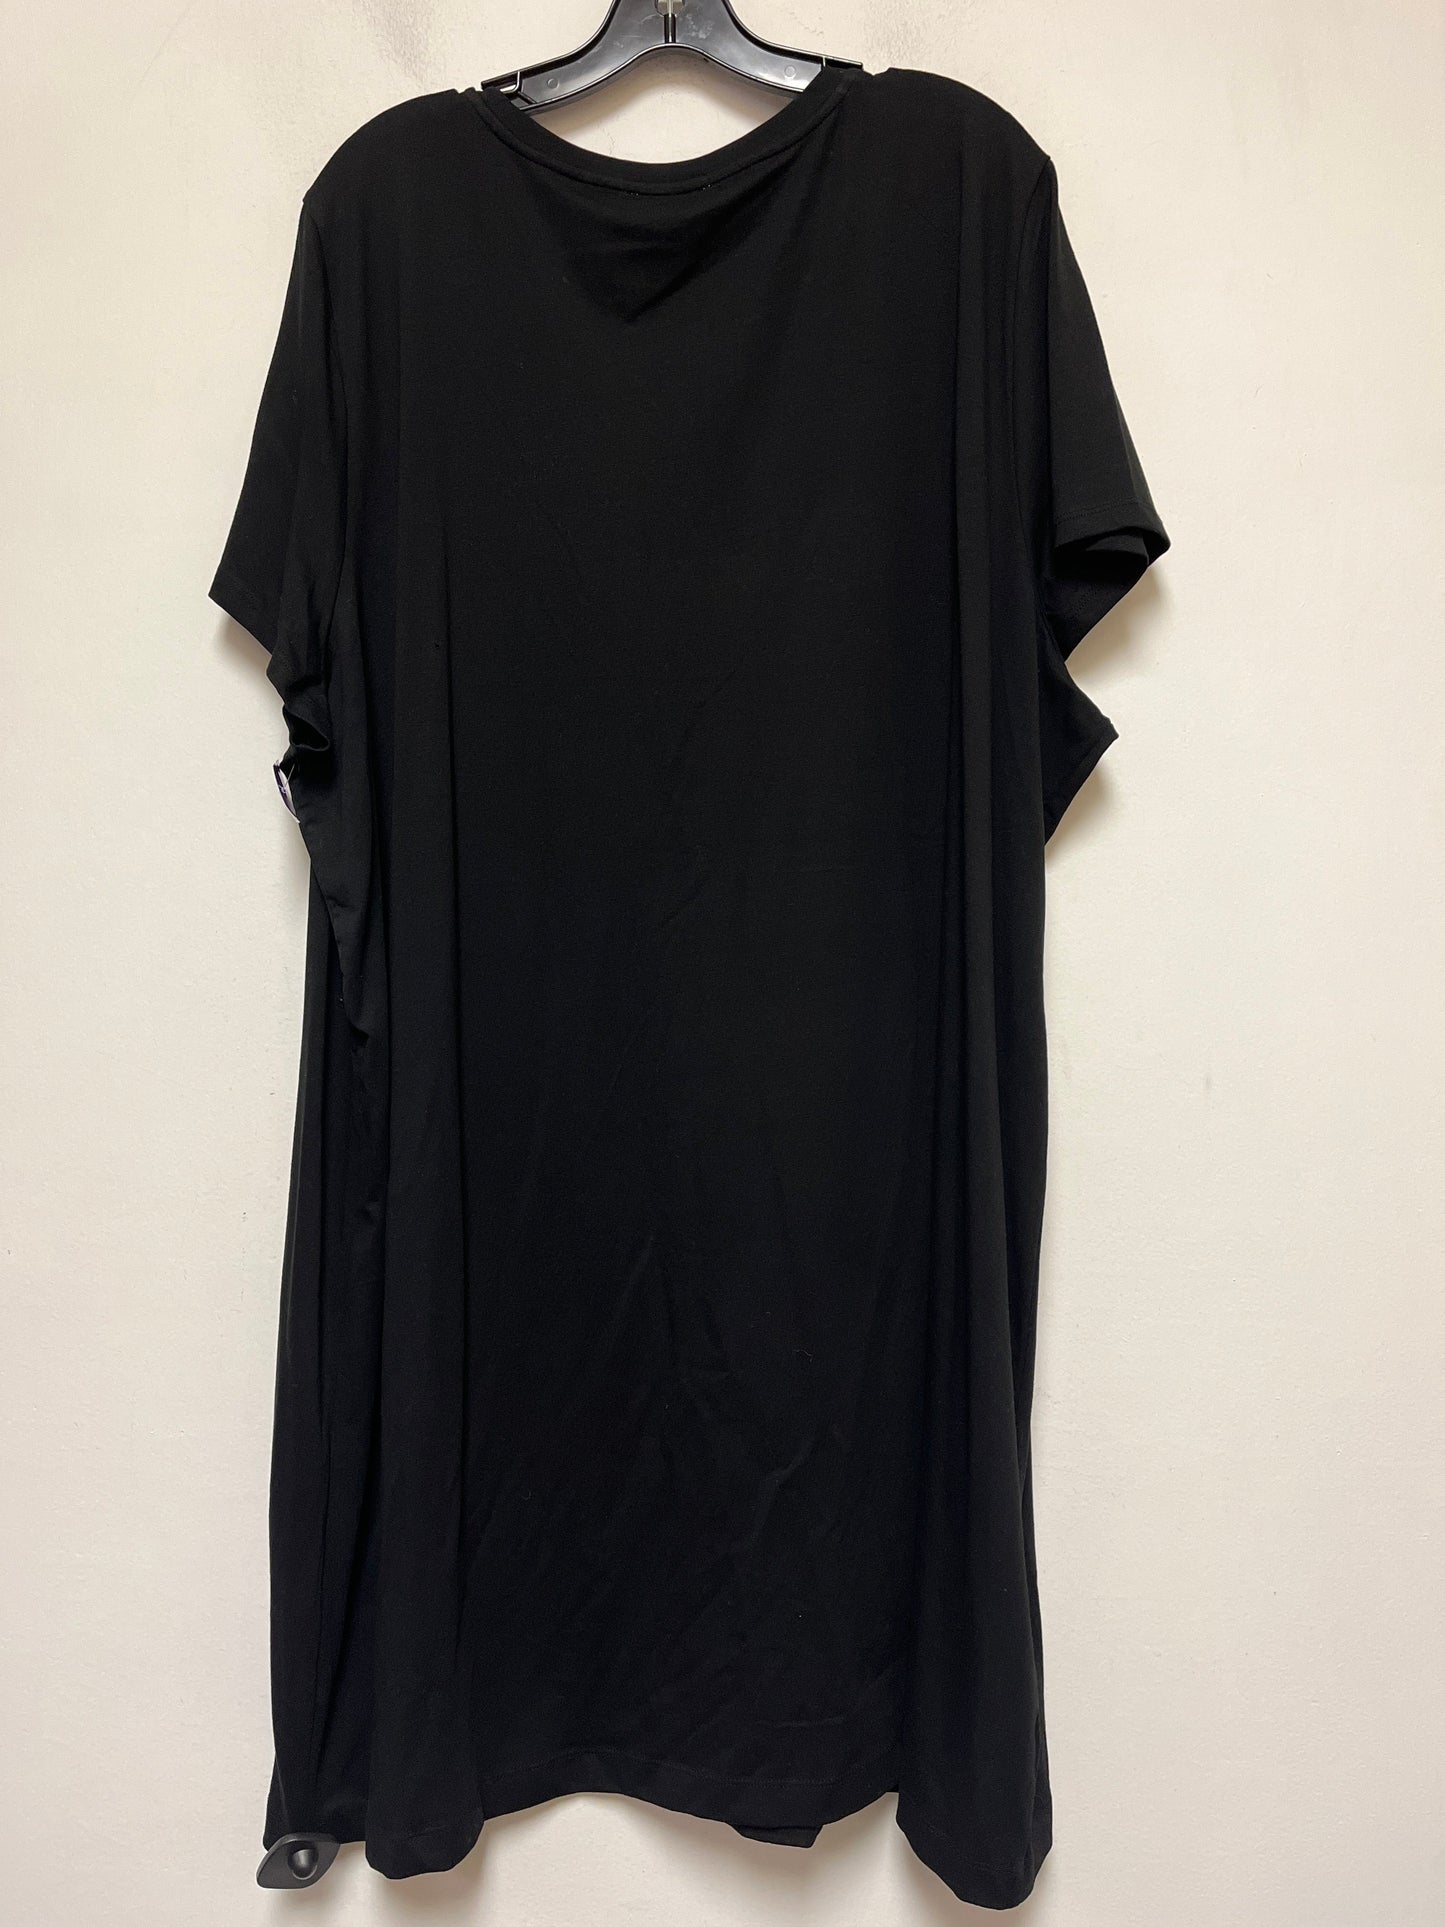 Dress Casual Midi By Calvin Klein  Size: 3x